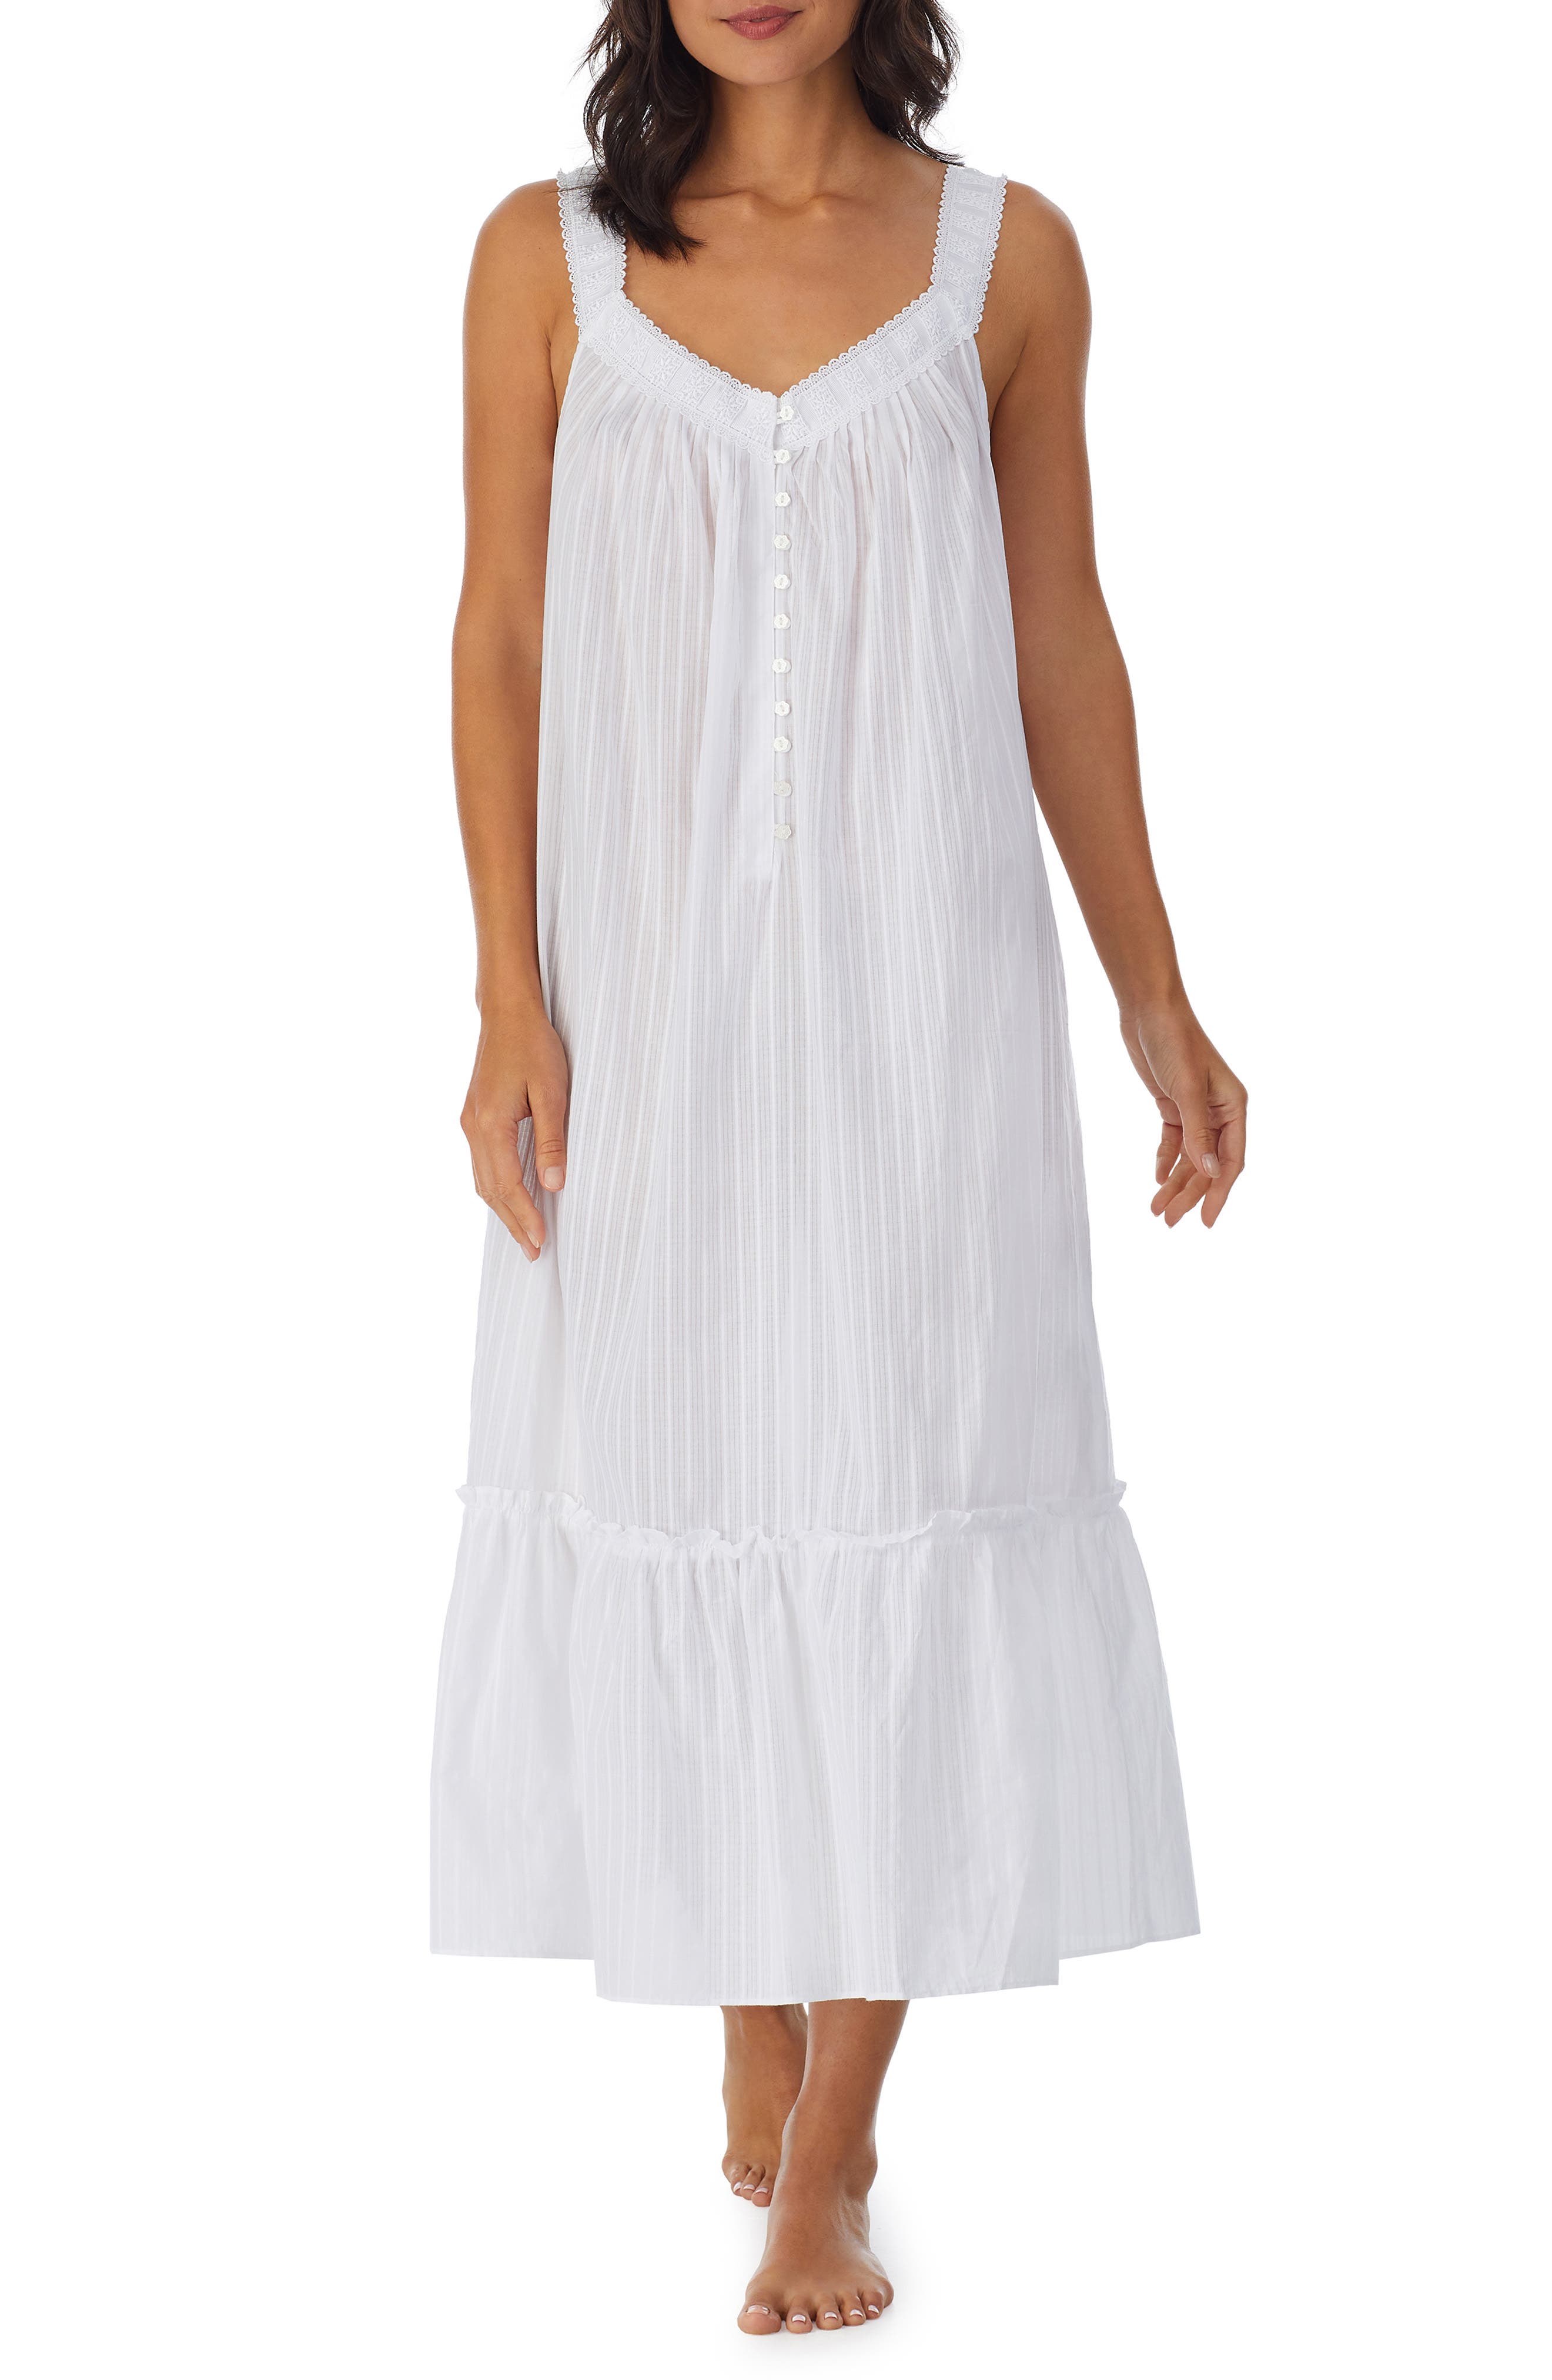 Women's White Nightgowns ☀ Nightshirts ...